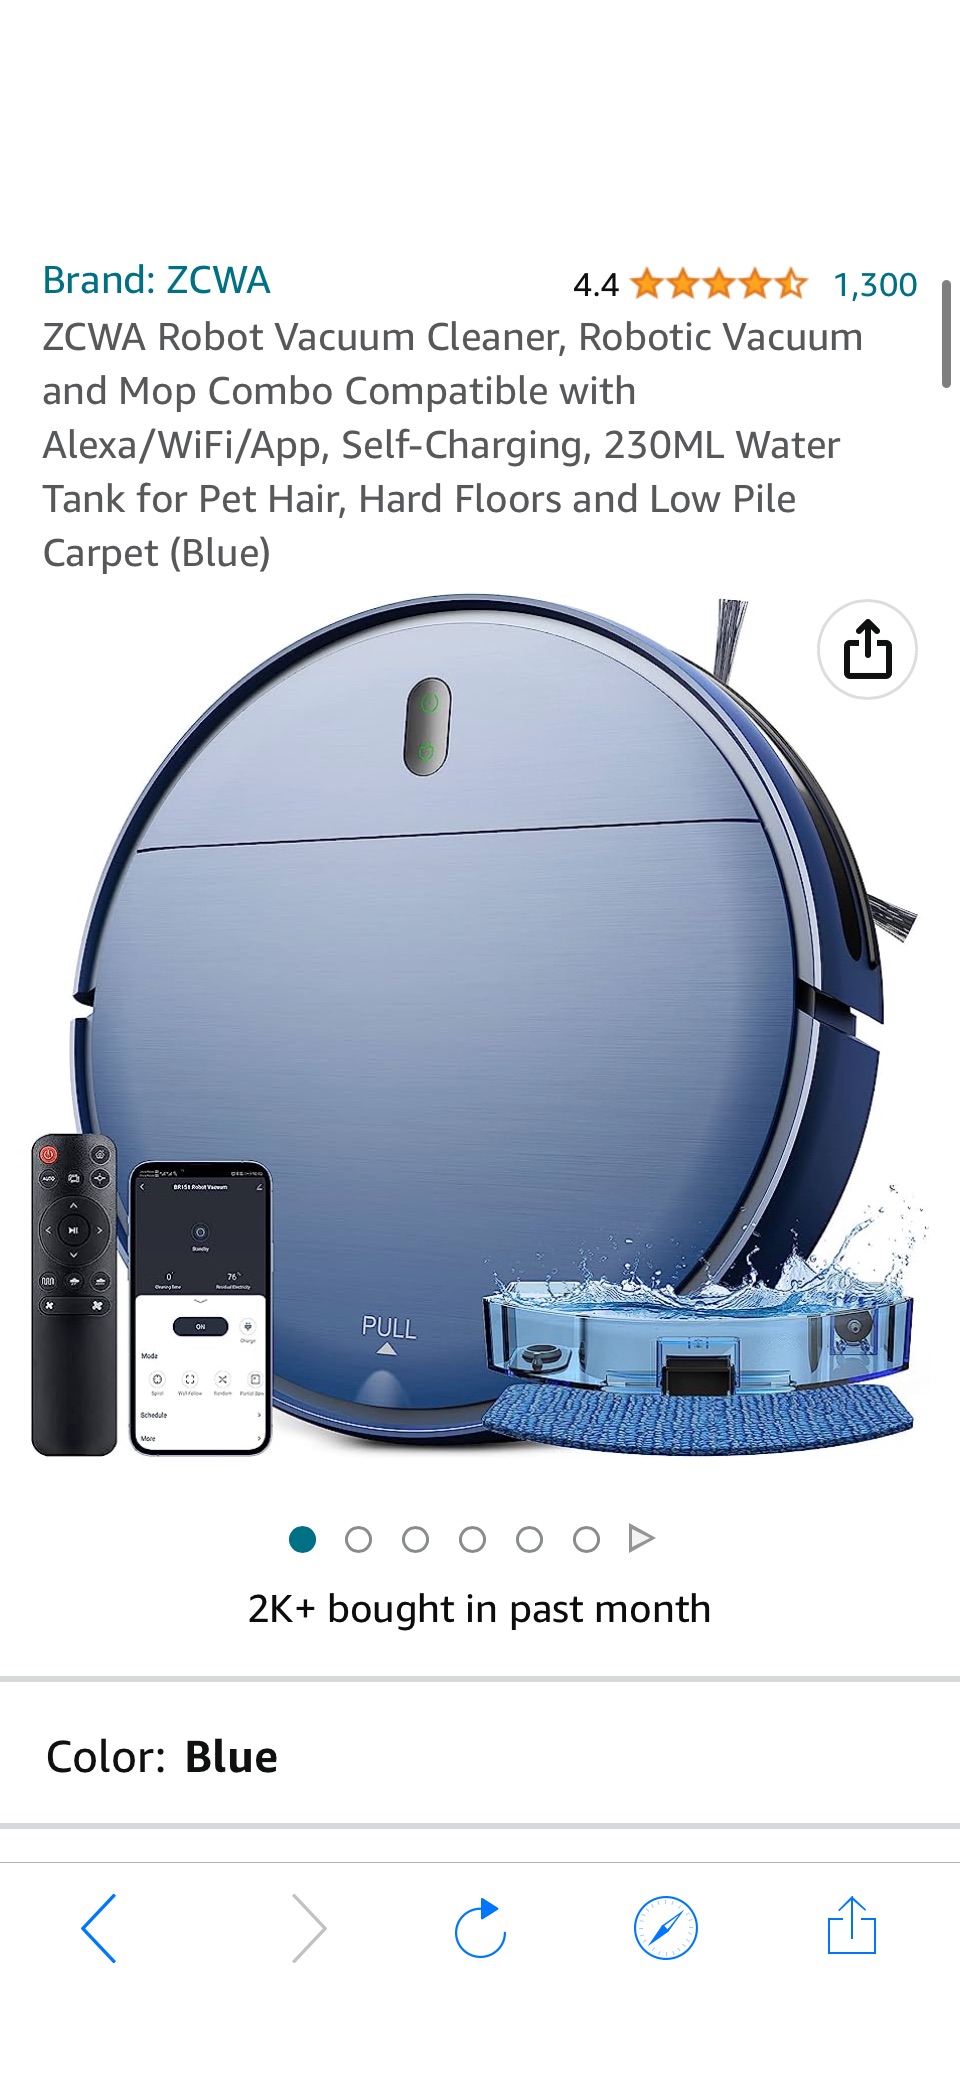 Amazon.com - ZCWA Robot Vacuum Cleaner, Robotic Vacuum and Mop Combo Compatible with Alexa/WiFi/App, Self-Charging,) -原价699.99